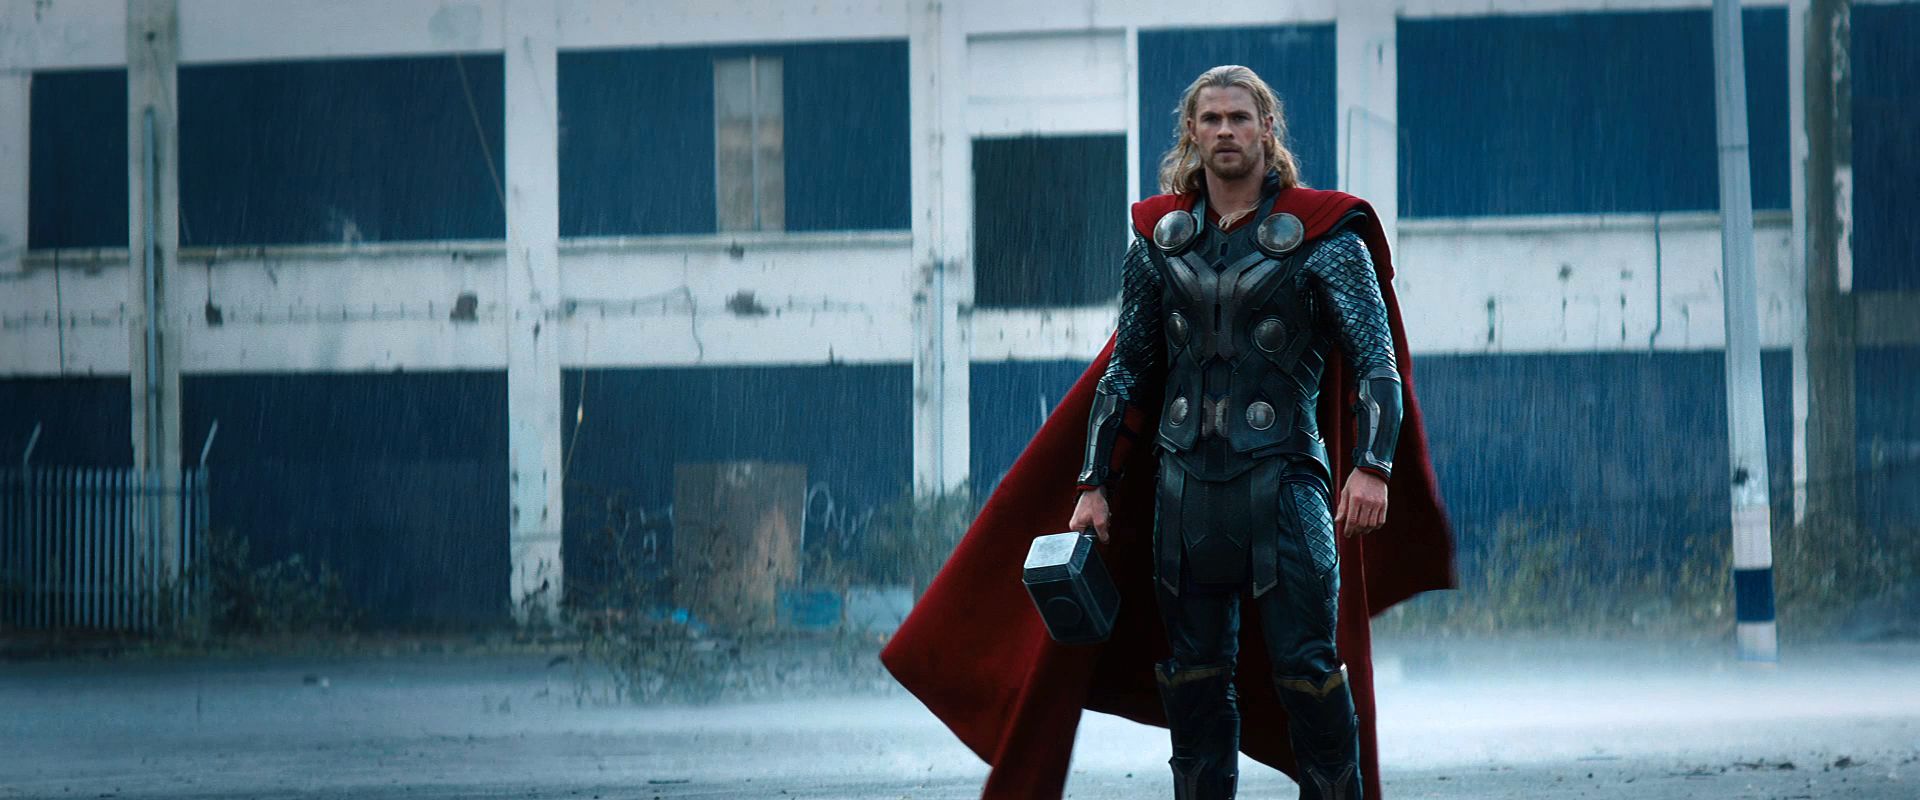 Thor: The Dark World Trailer Photo 1